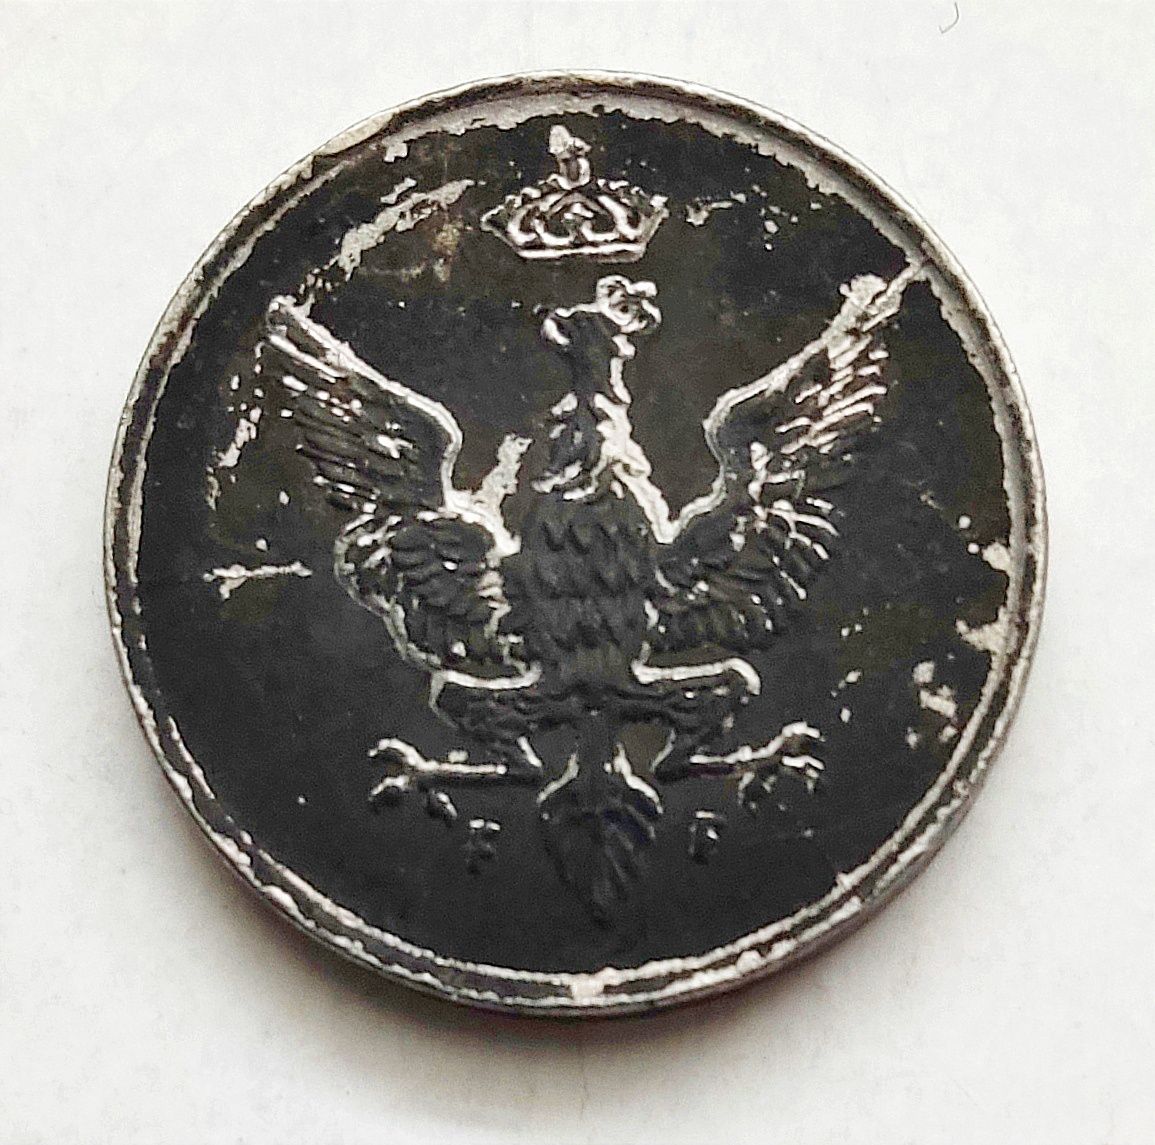 Moneta 1 fenig 1918 Królestwo Polskie